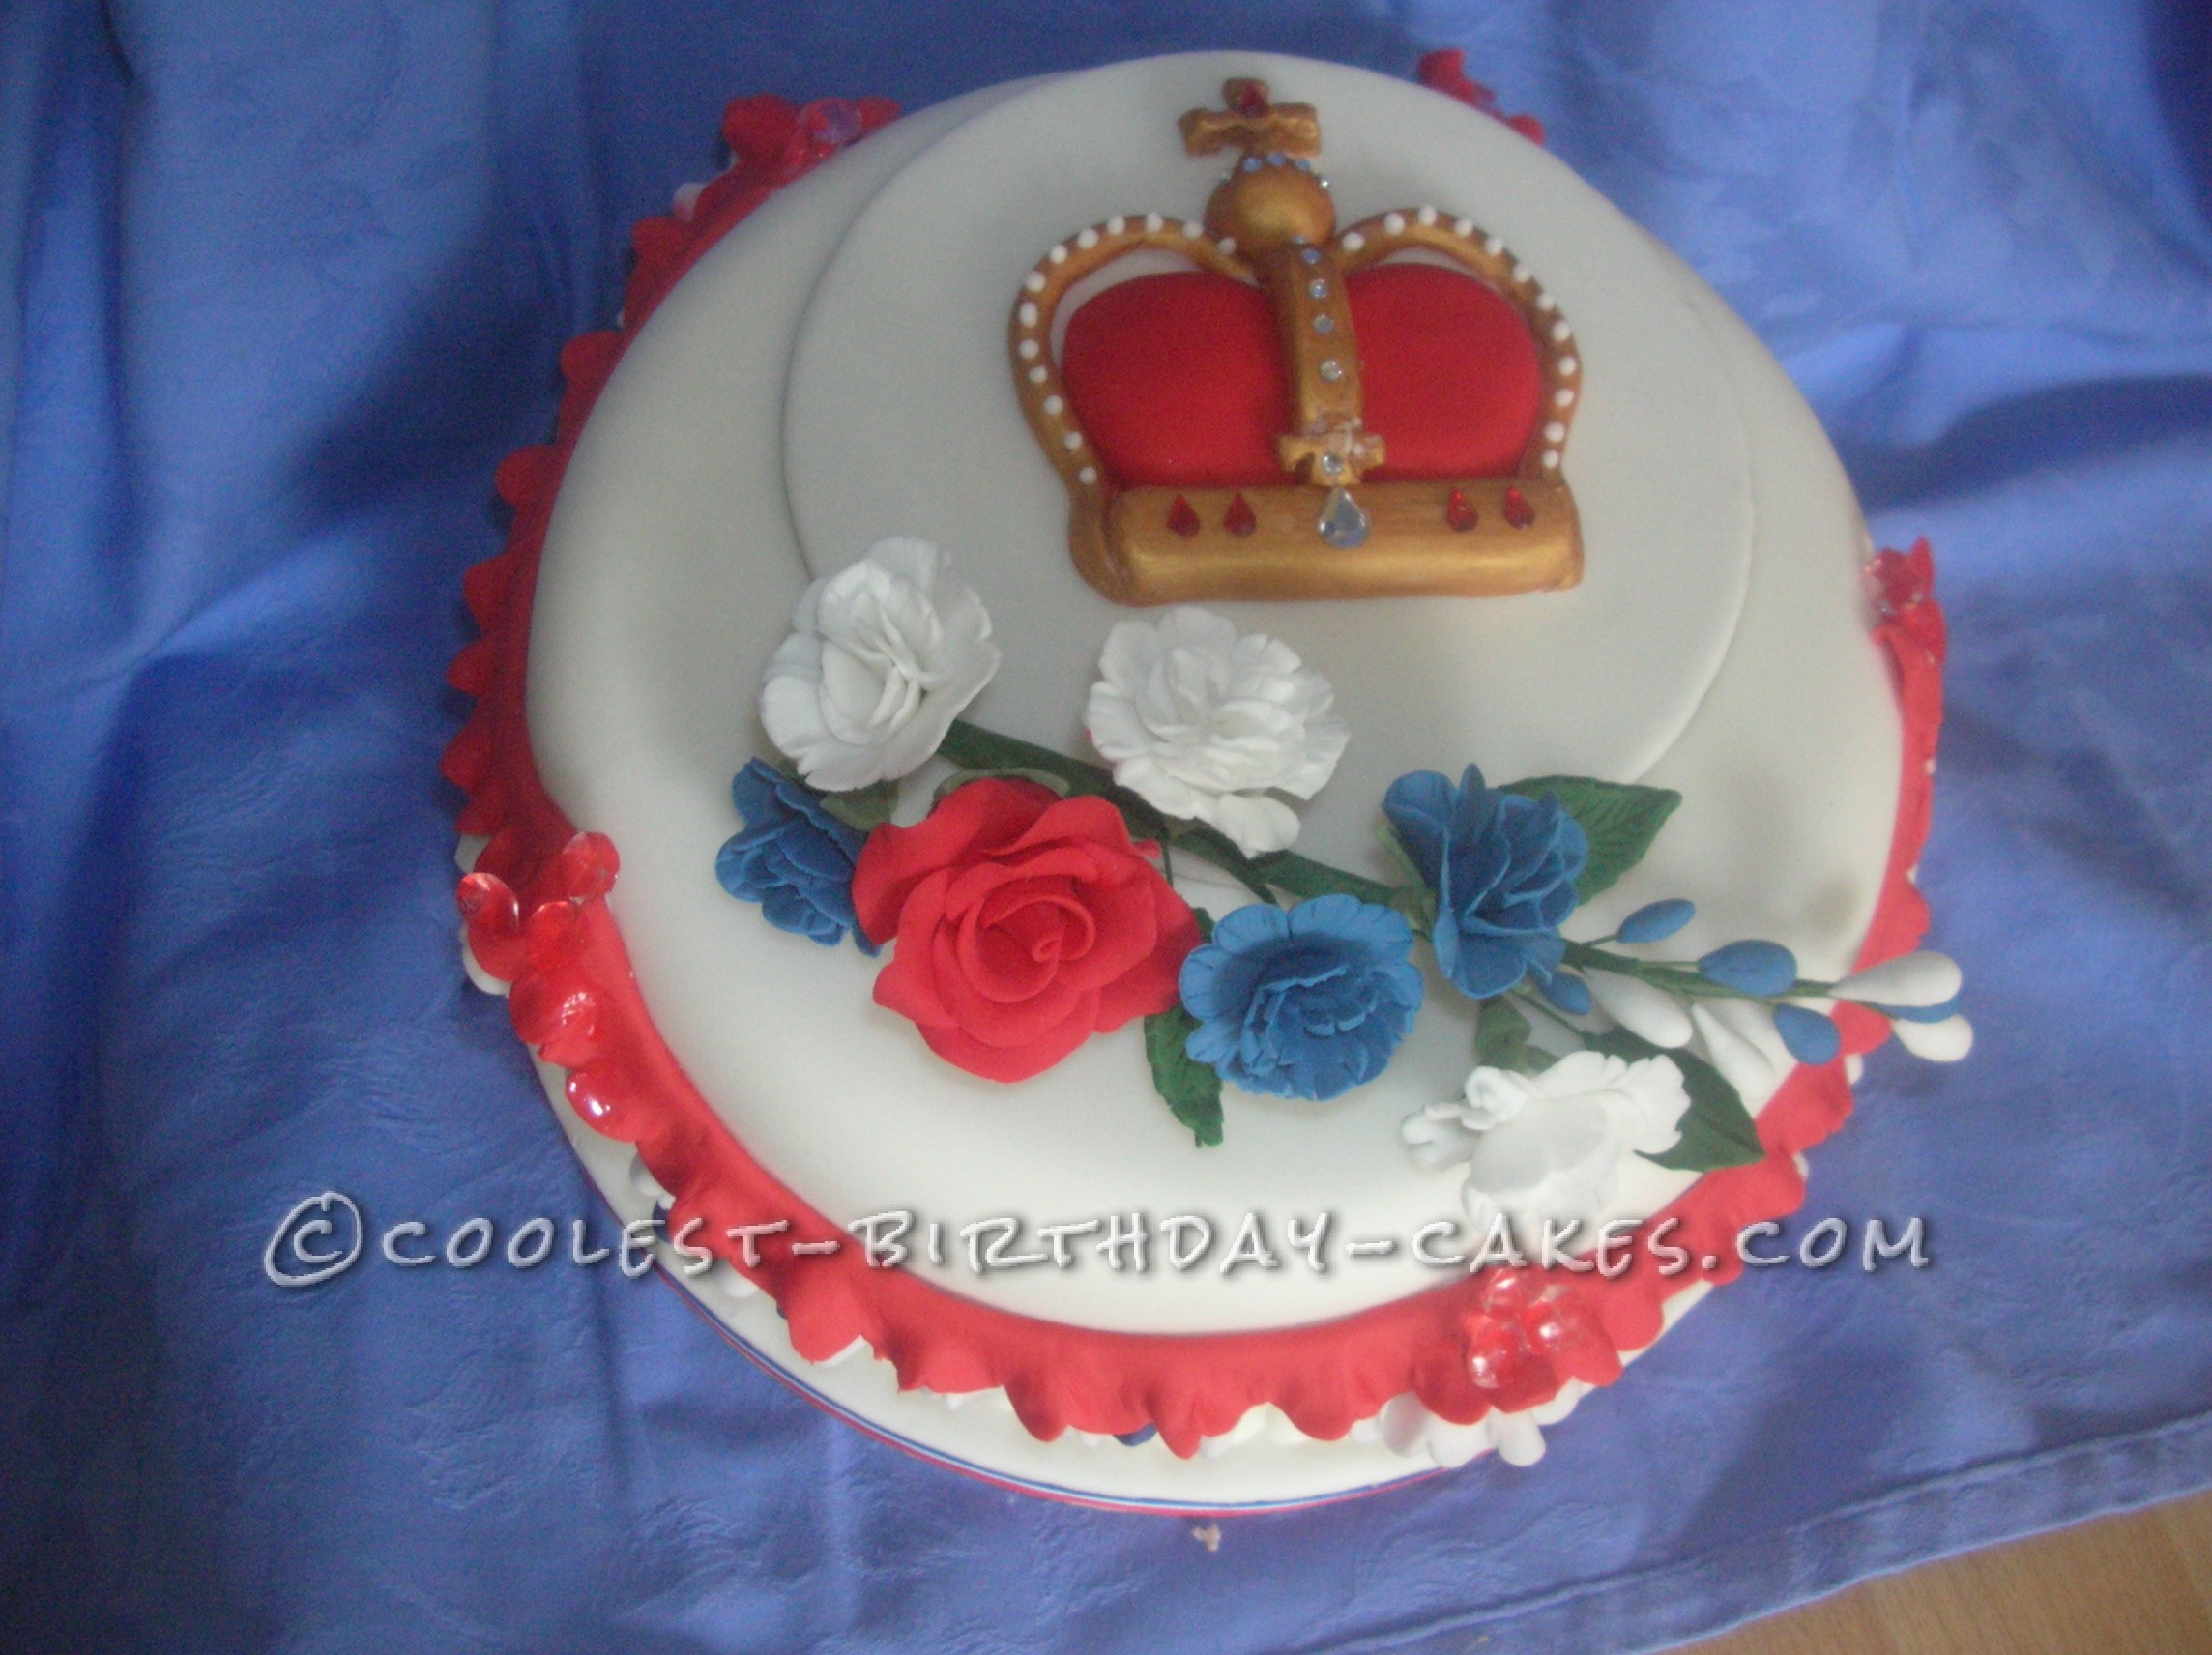 Coolest Diamond Jubilee Cake